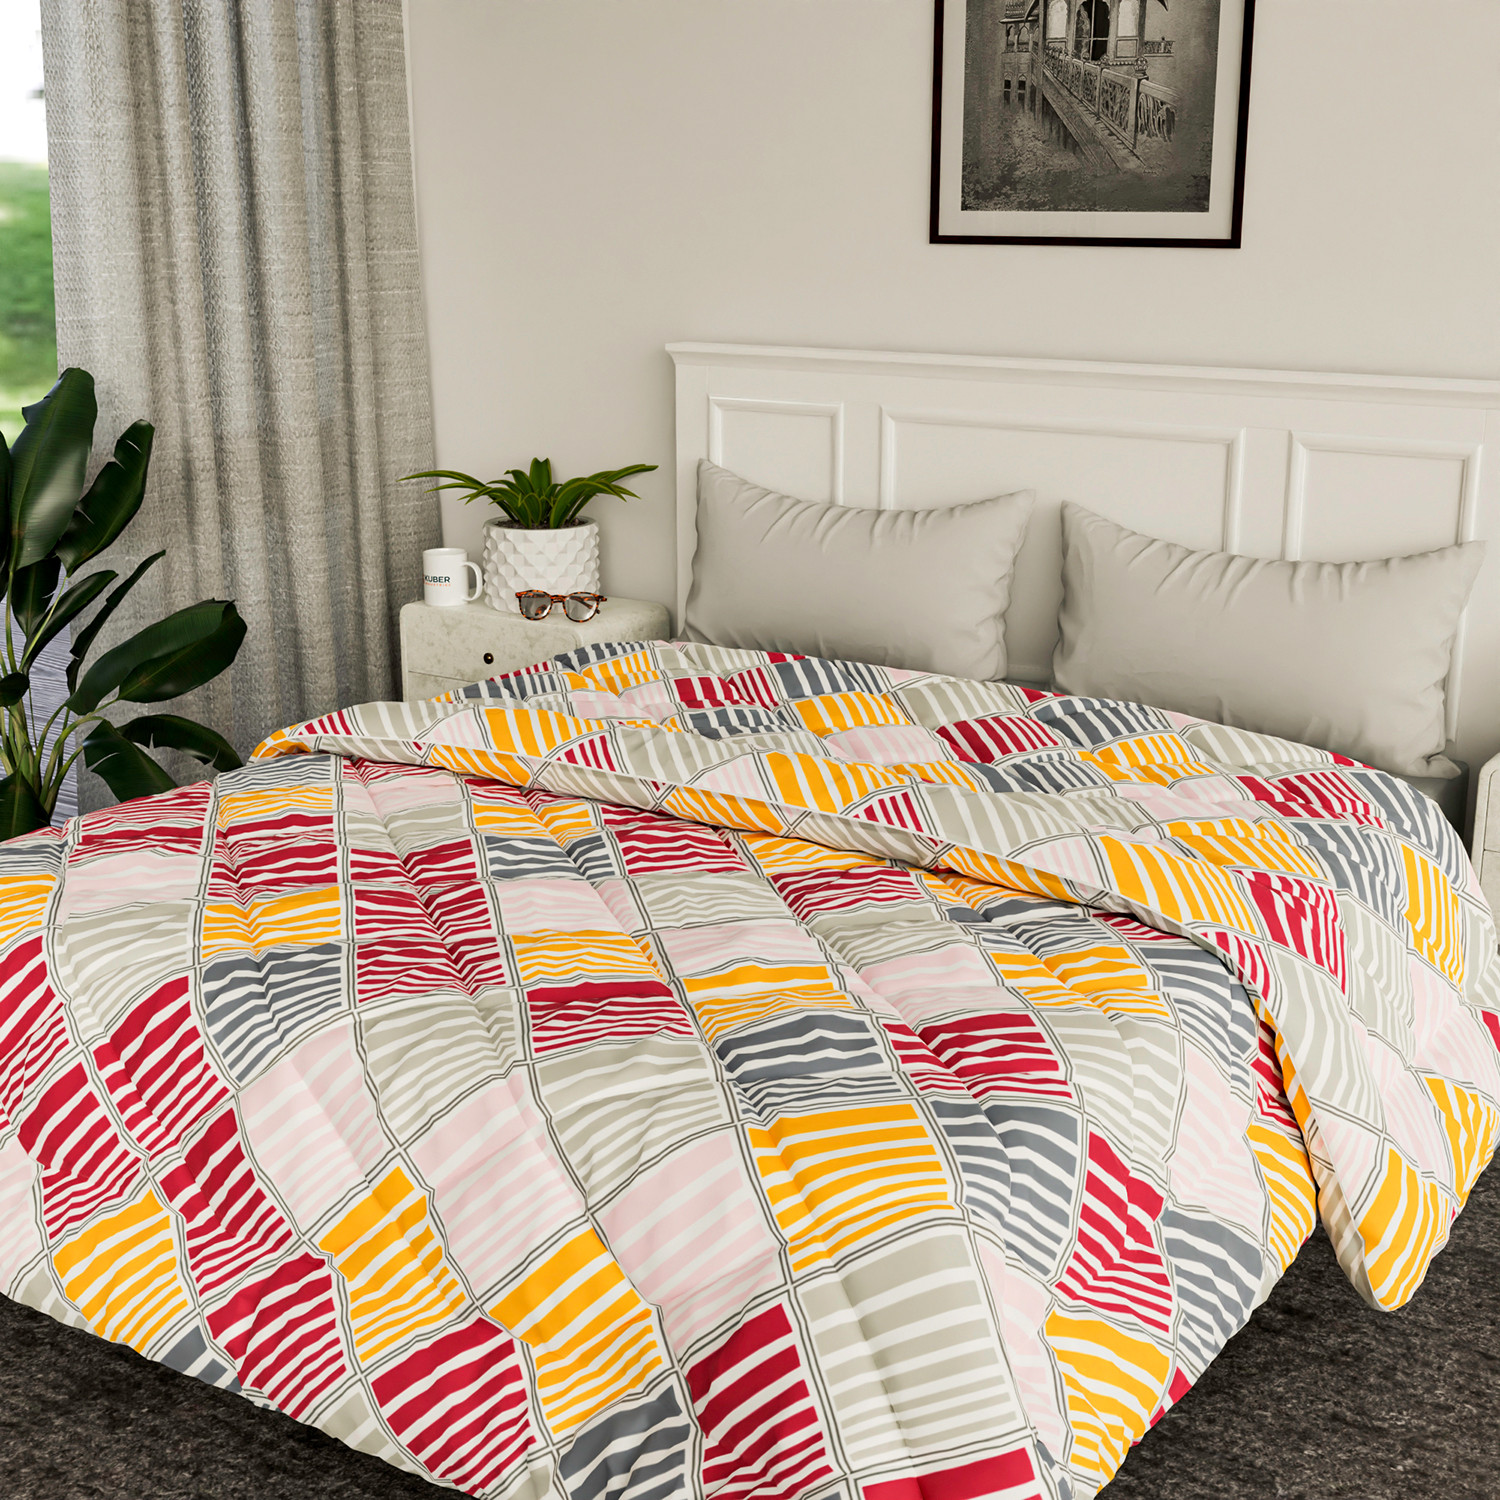 Kuber Industries Comforter for Double Bed|Microfiber Winter Comforter for Double Bed|220 GSM Reversible Check Design Comforter|AC Quilt|Dohar (Multicolor)